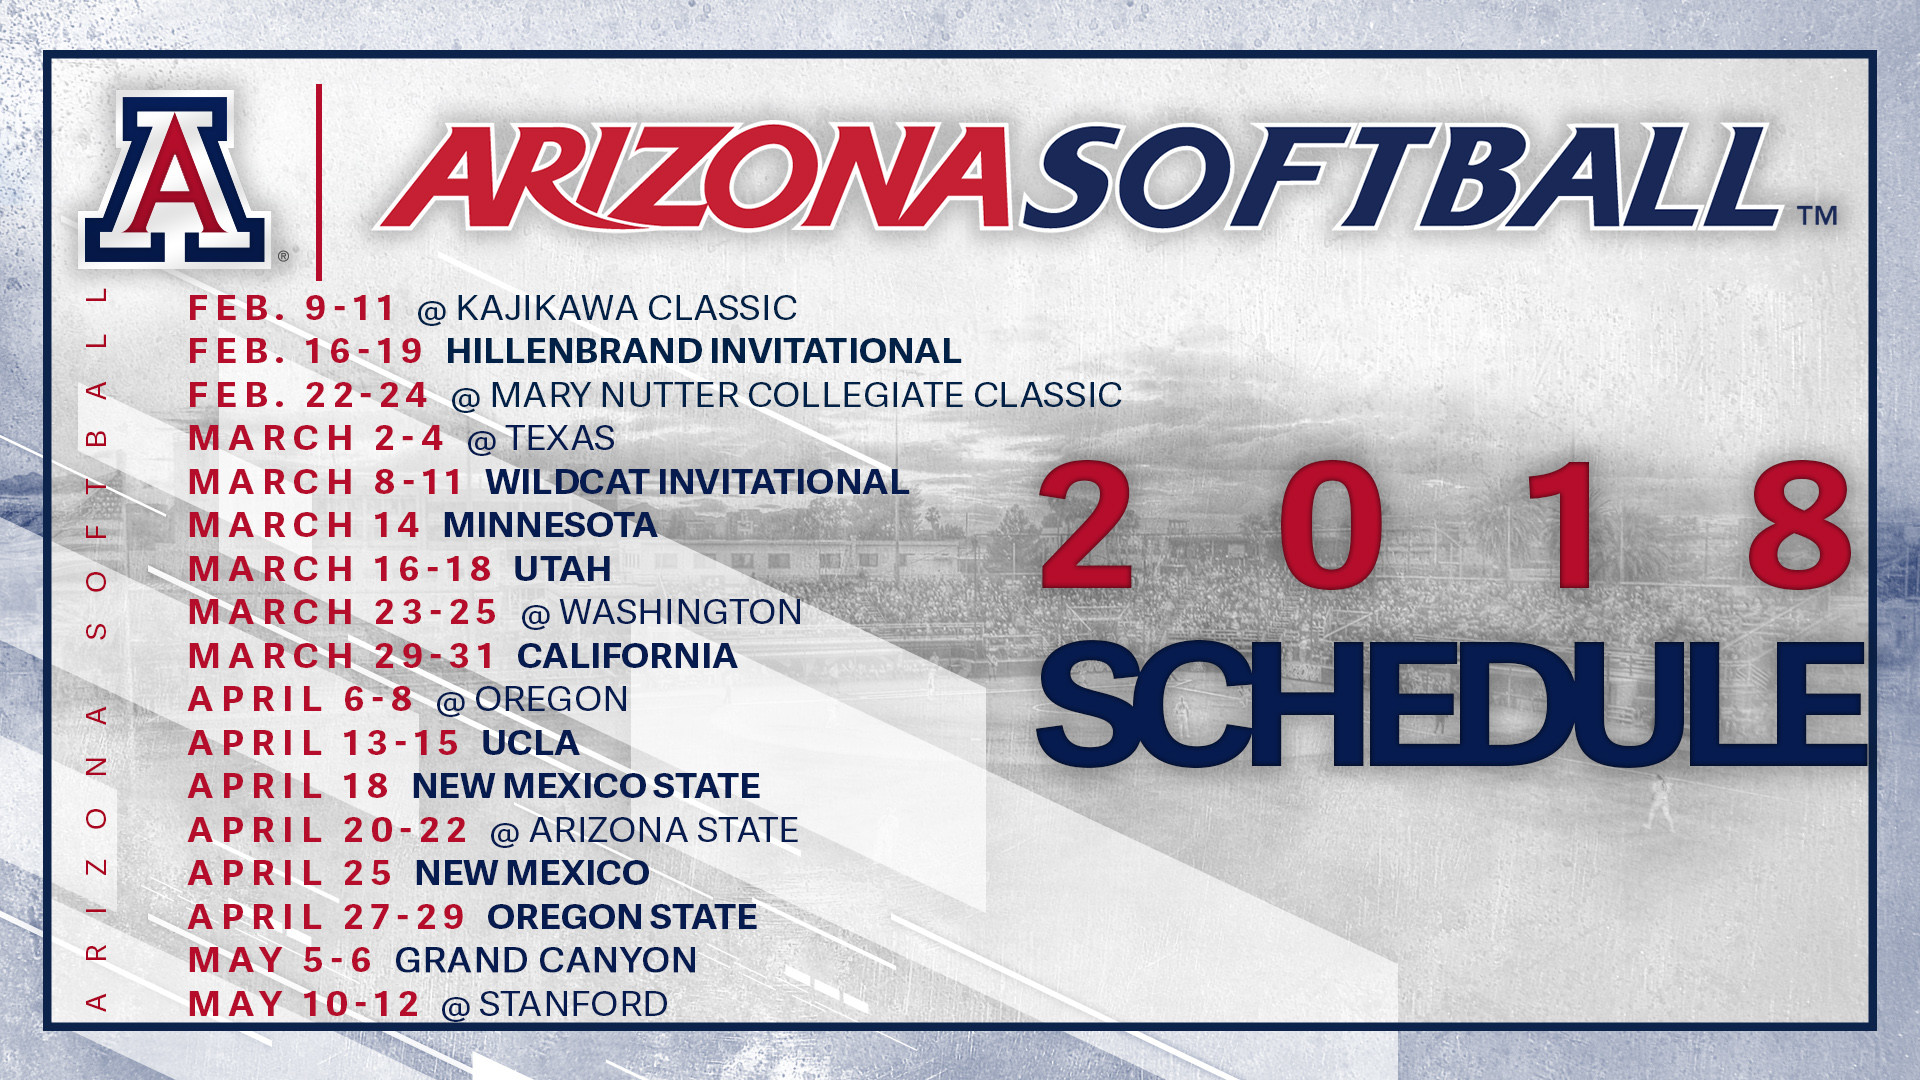 1920x1080 Arizona Softball 2018 Schedule Released